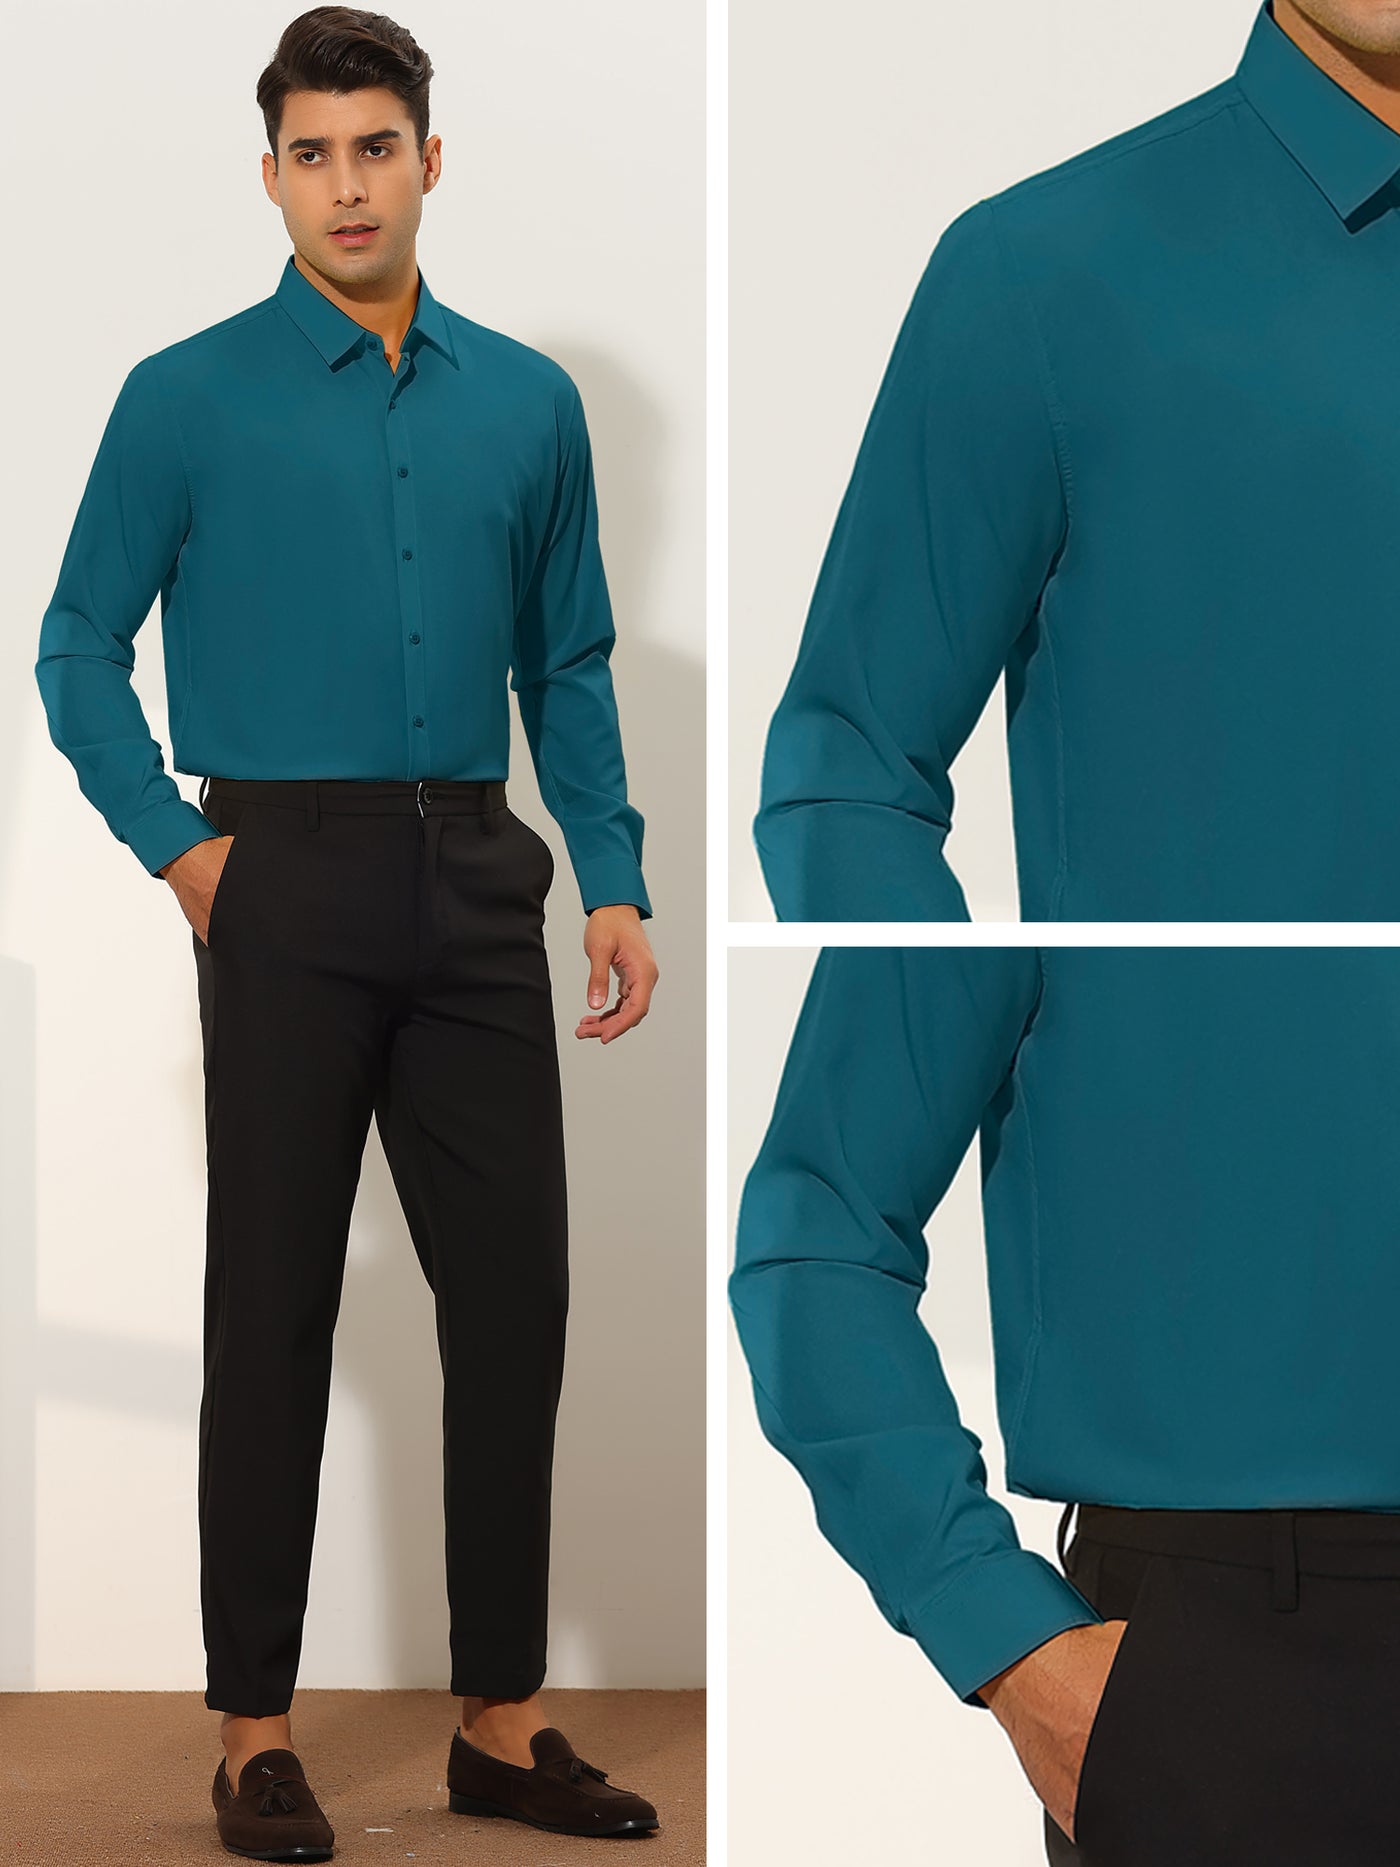 Bublédon Men's Solid Tuxedo Long Sleeves Button Down Office Business Dress Shirts